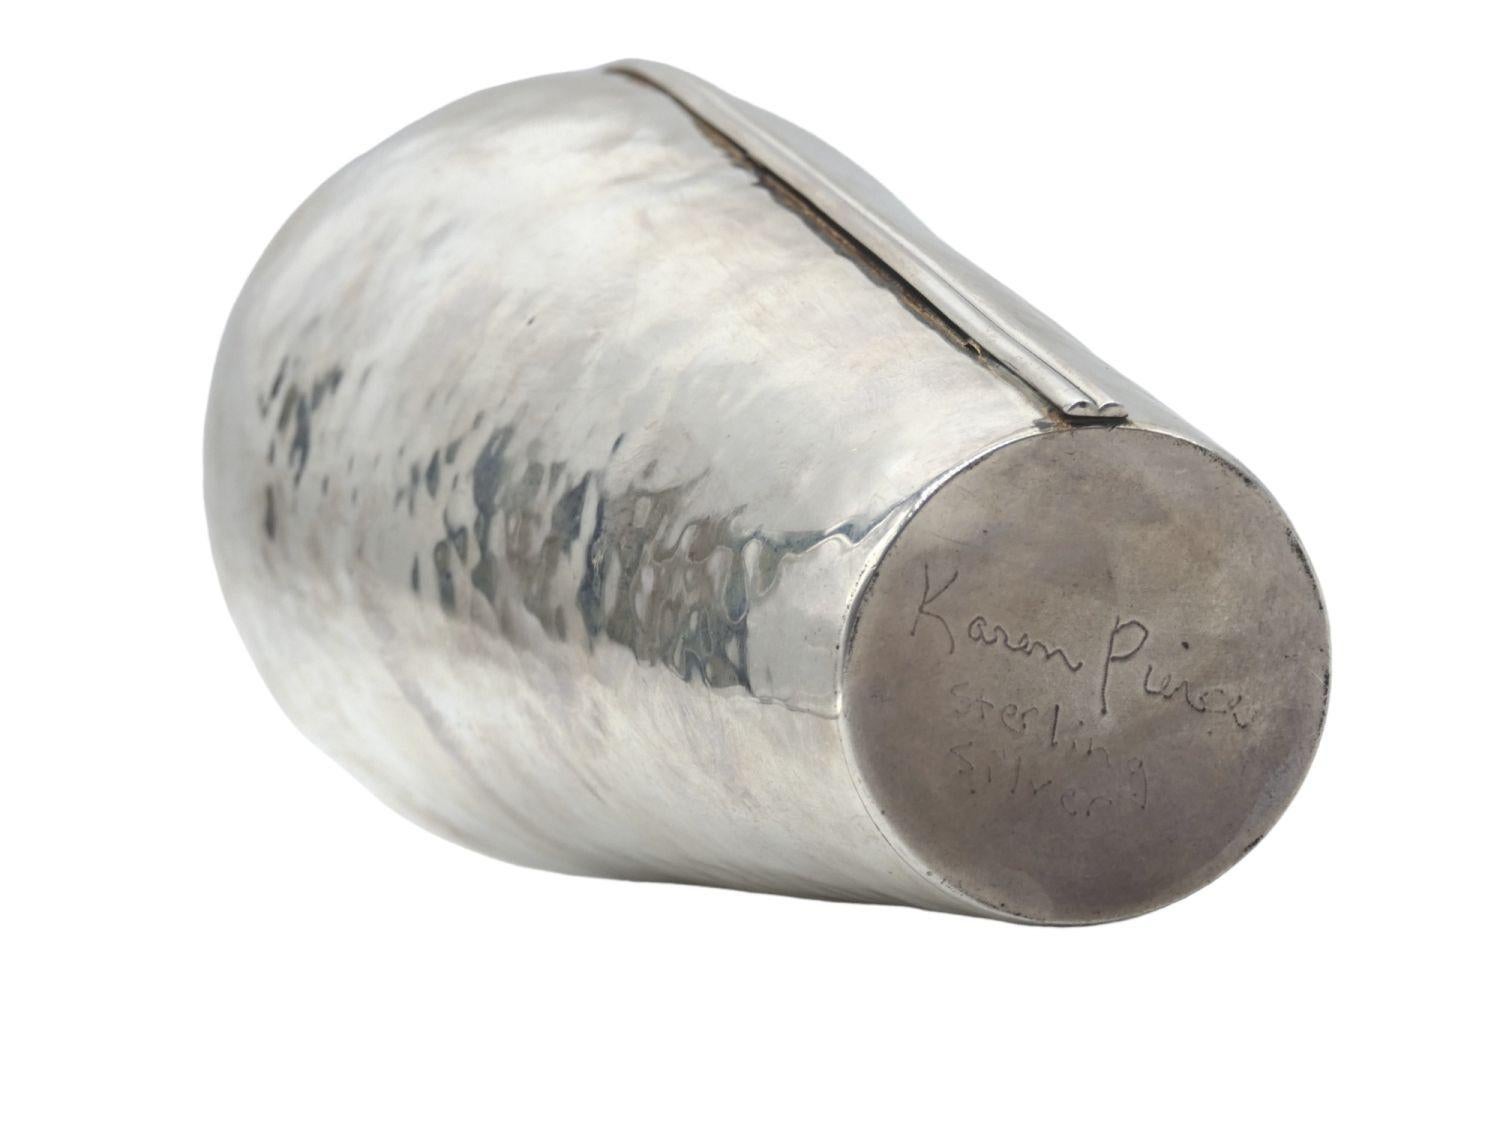 A Hammered Sterling Silver and Enamel Vase by Karen Pierce For Sale 1